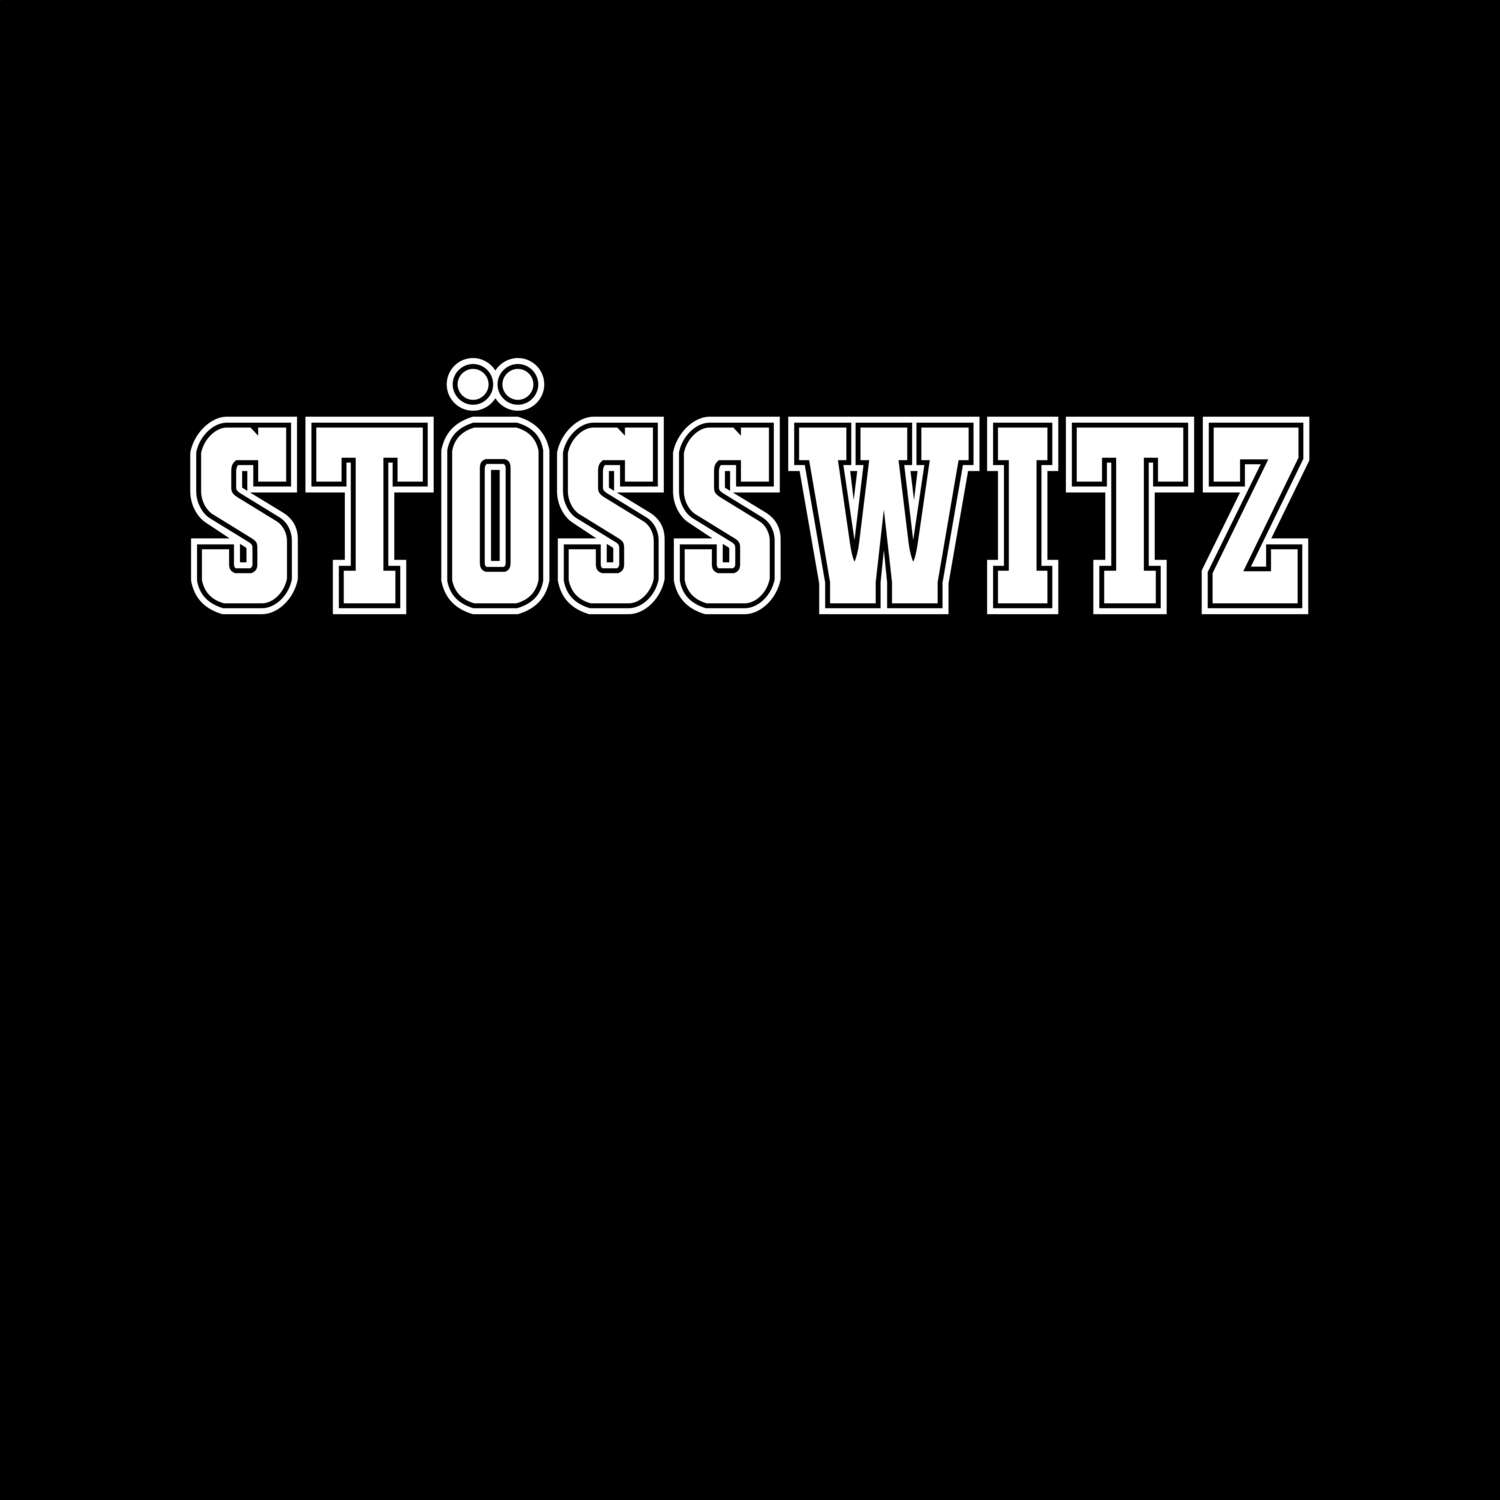 Stößwitz T-Shirt »Classic«